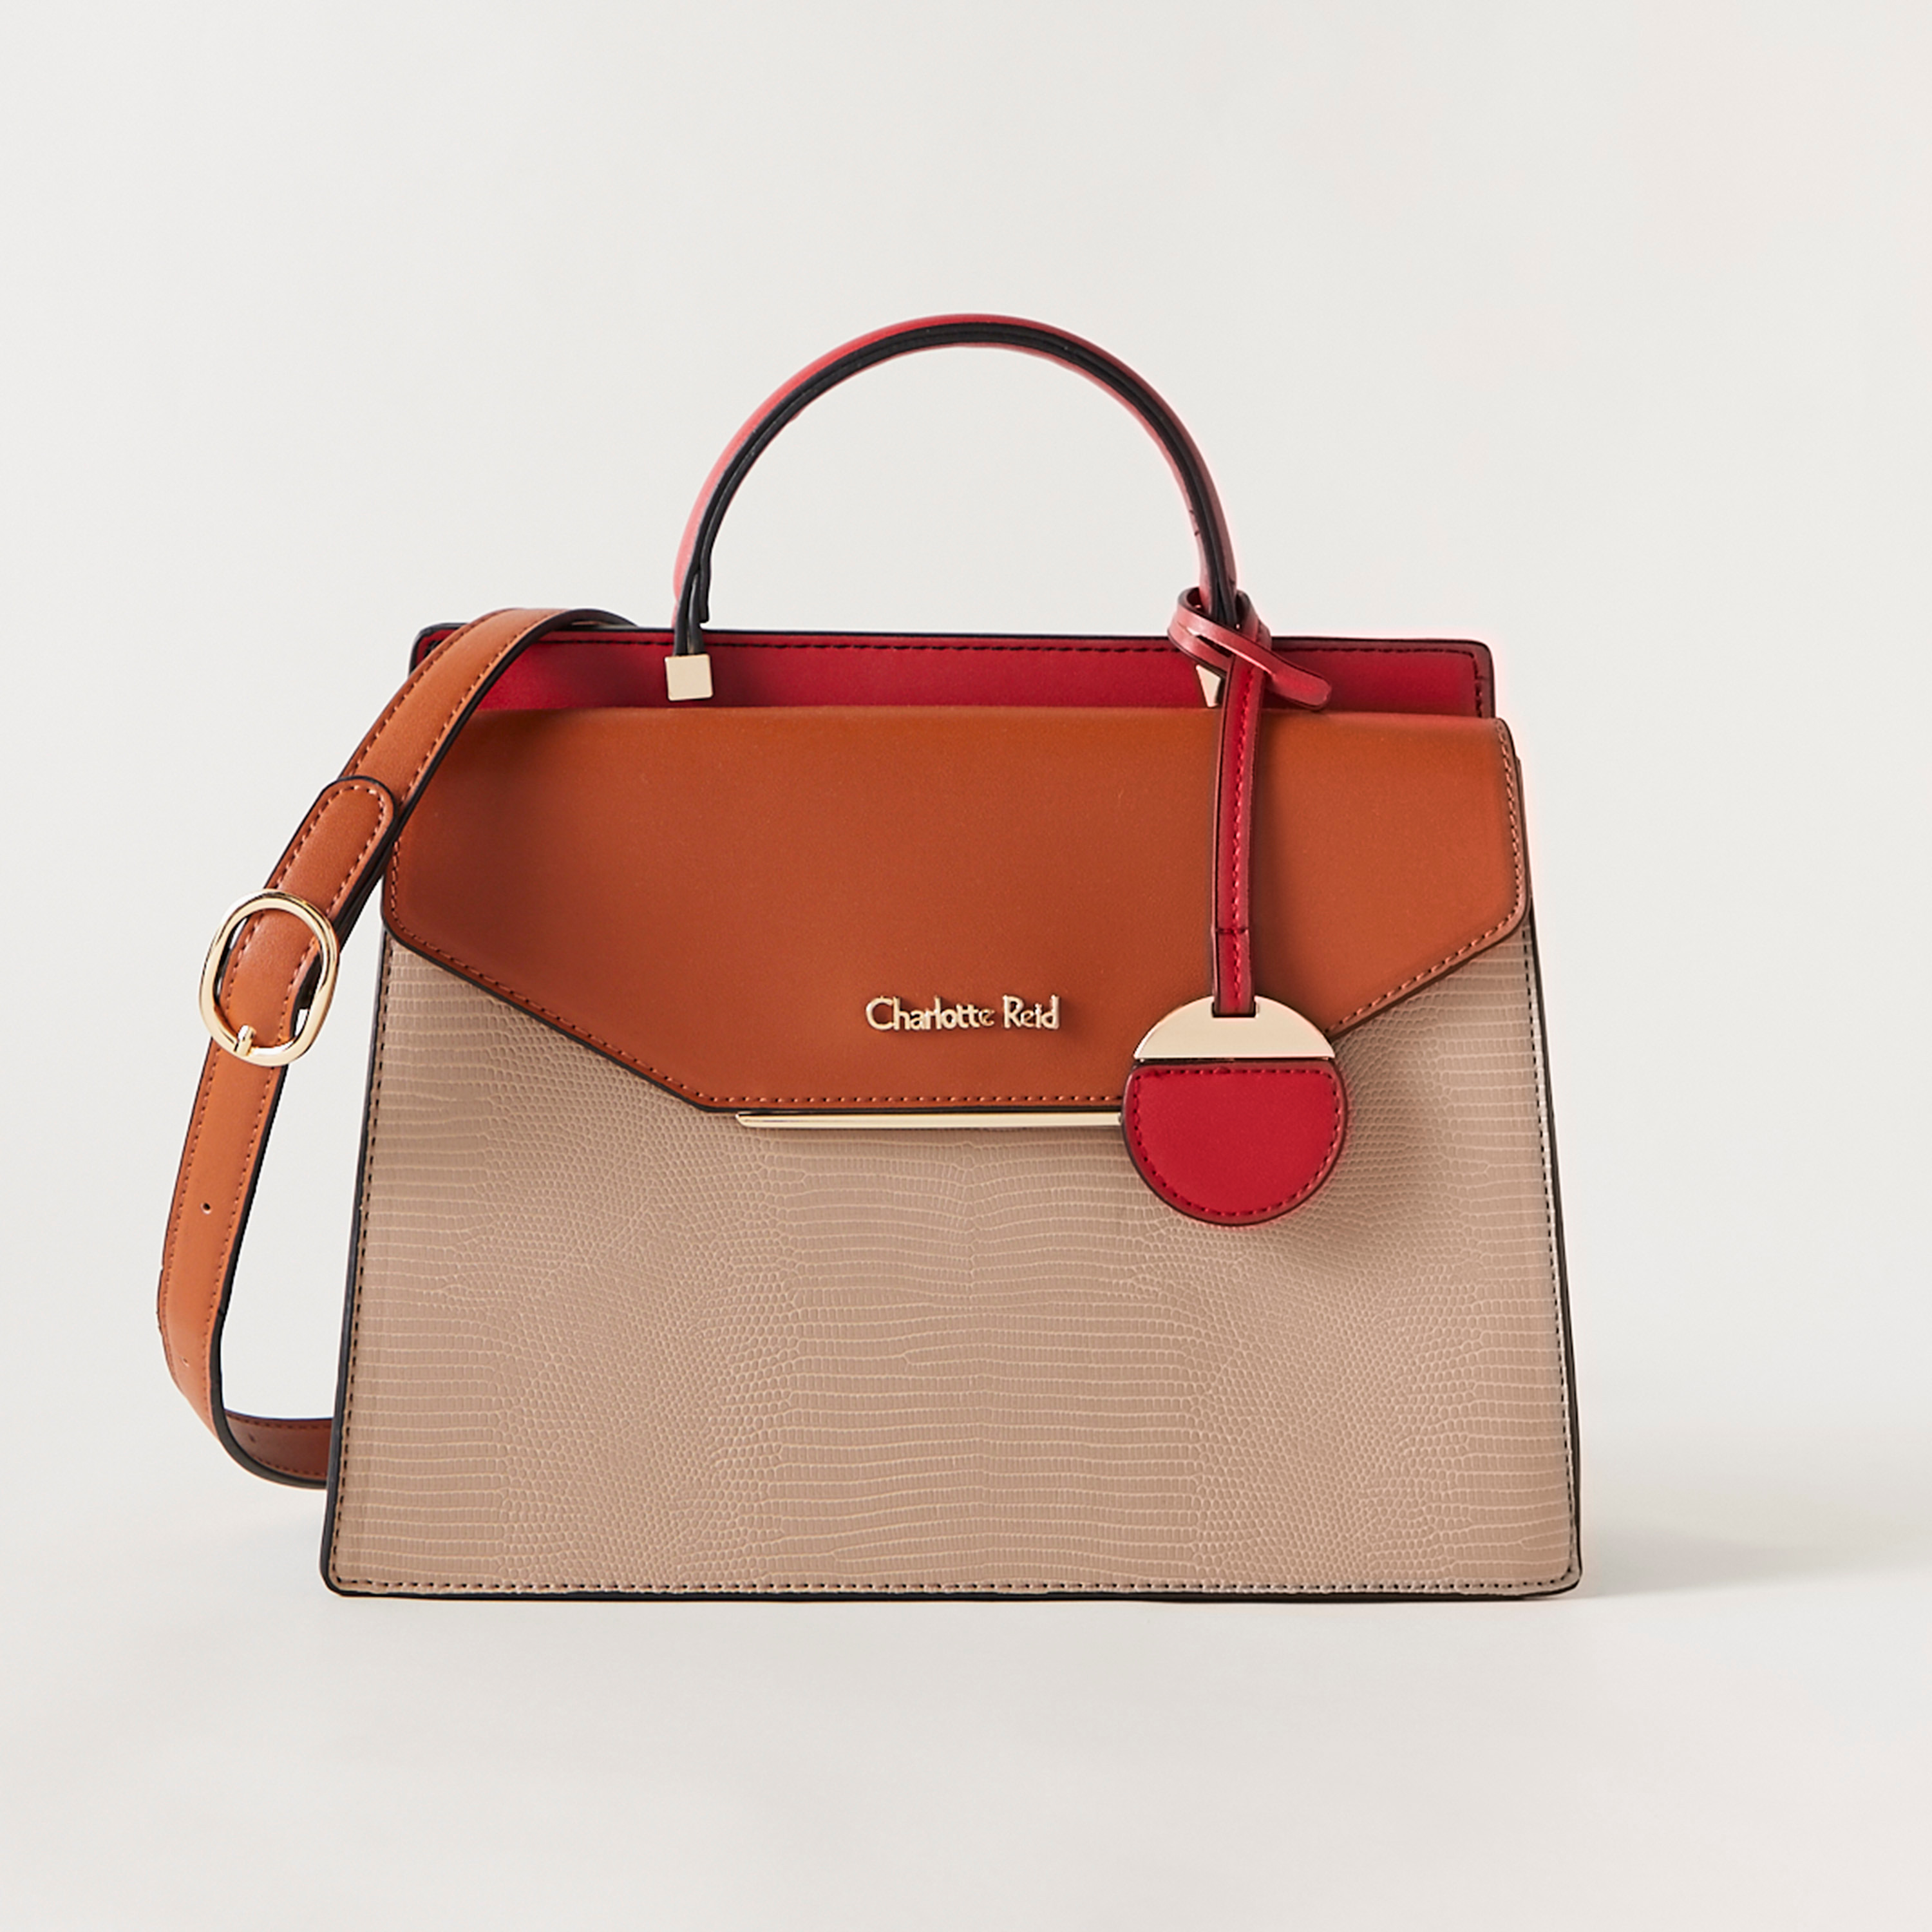 Charlotte Reid Taupe Purse | Taupe purse, Purses, Bags